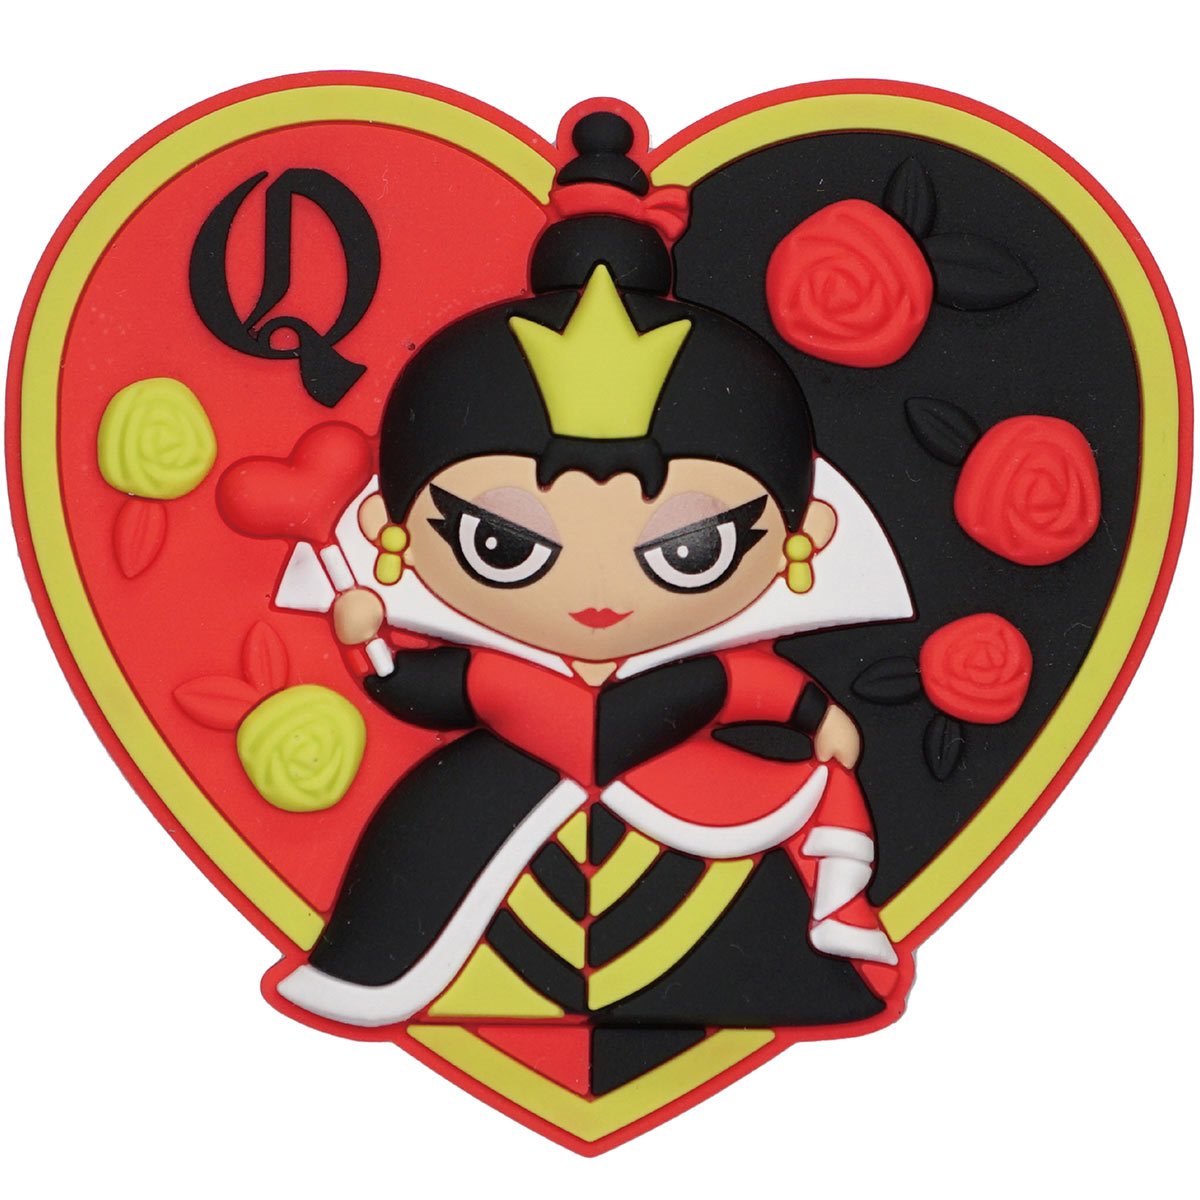 Disney Villains Queen of Hearts Soft Touch Magnet